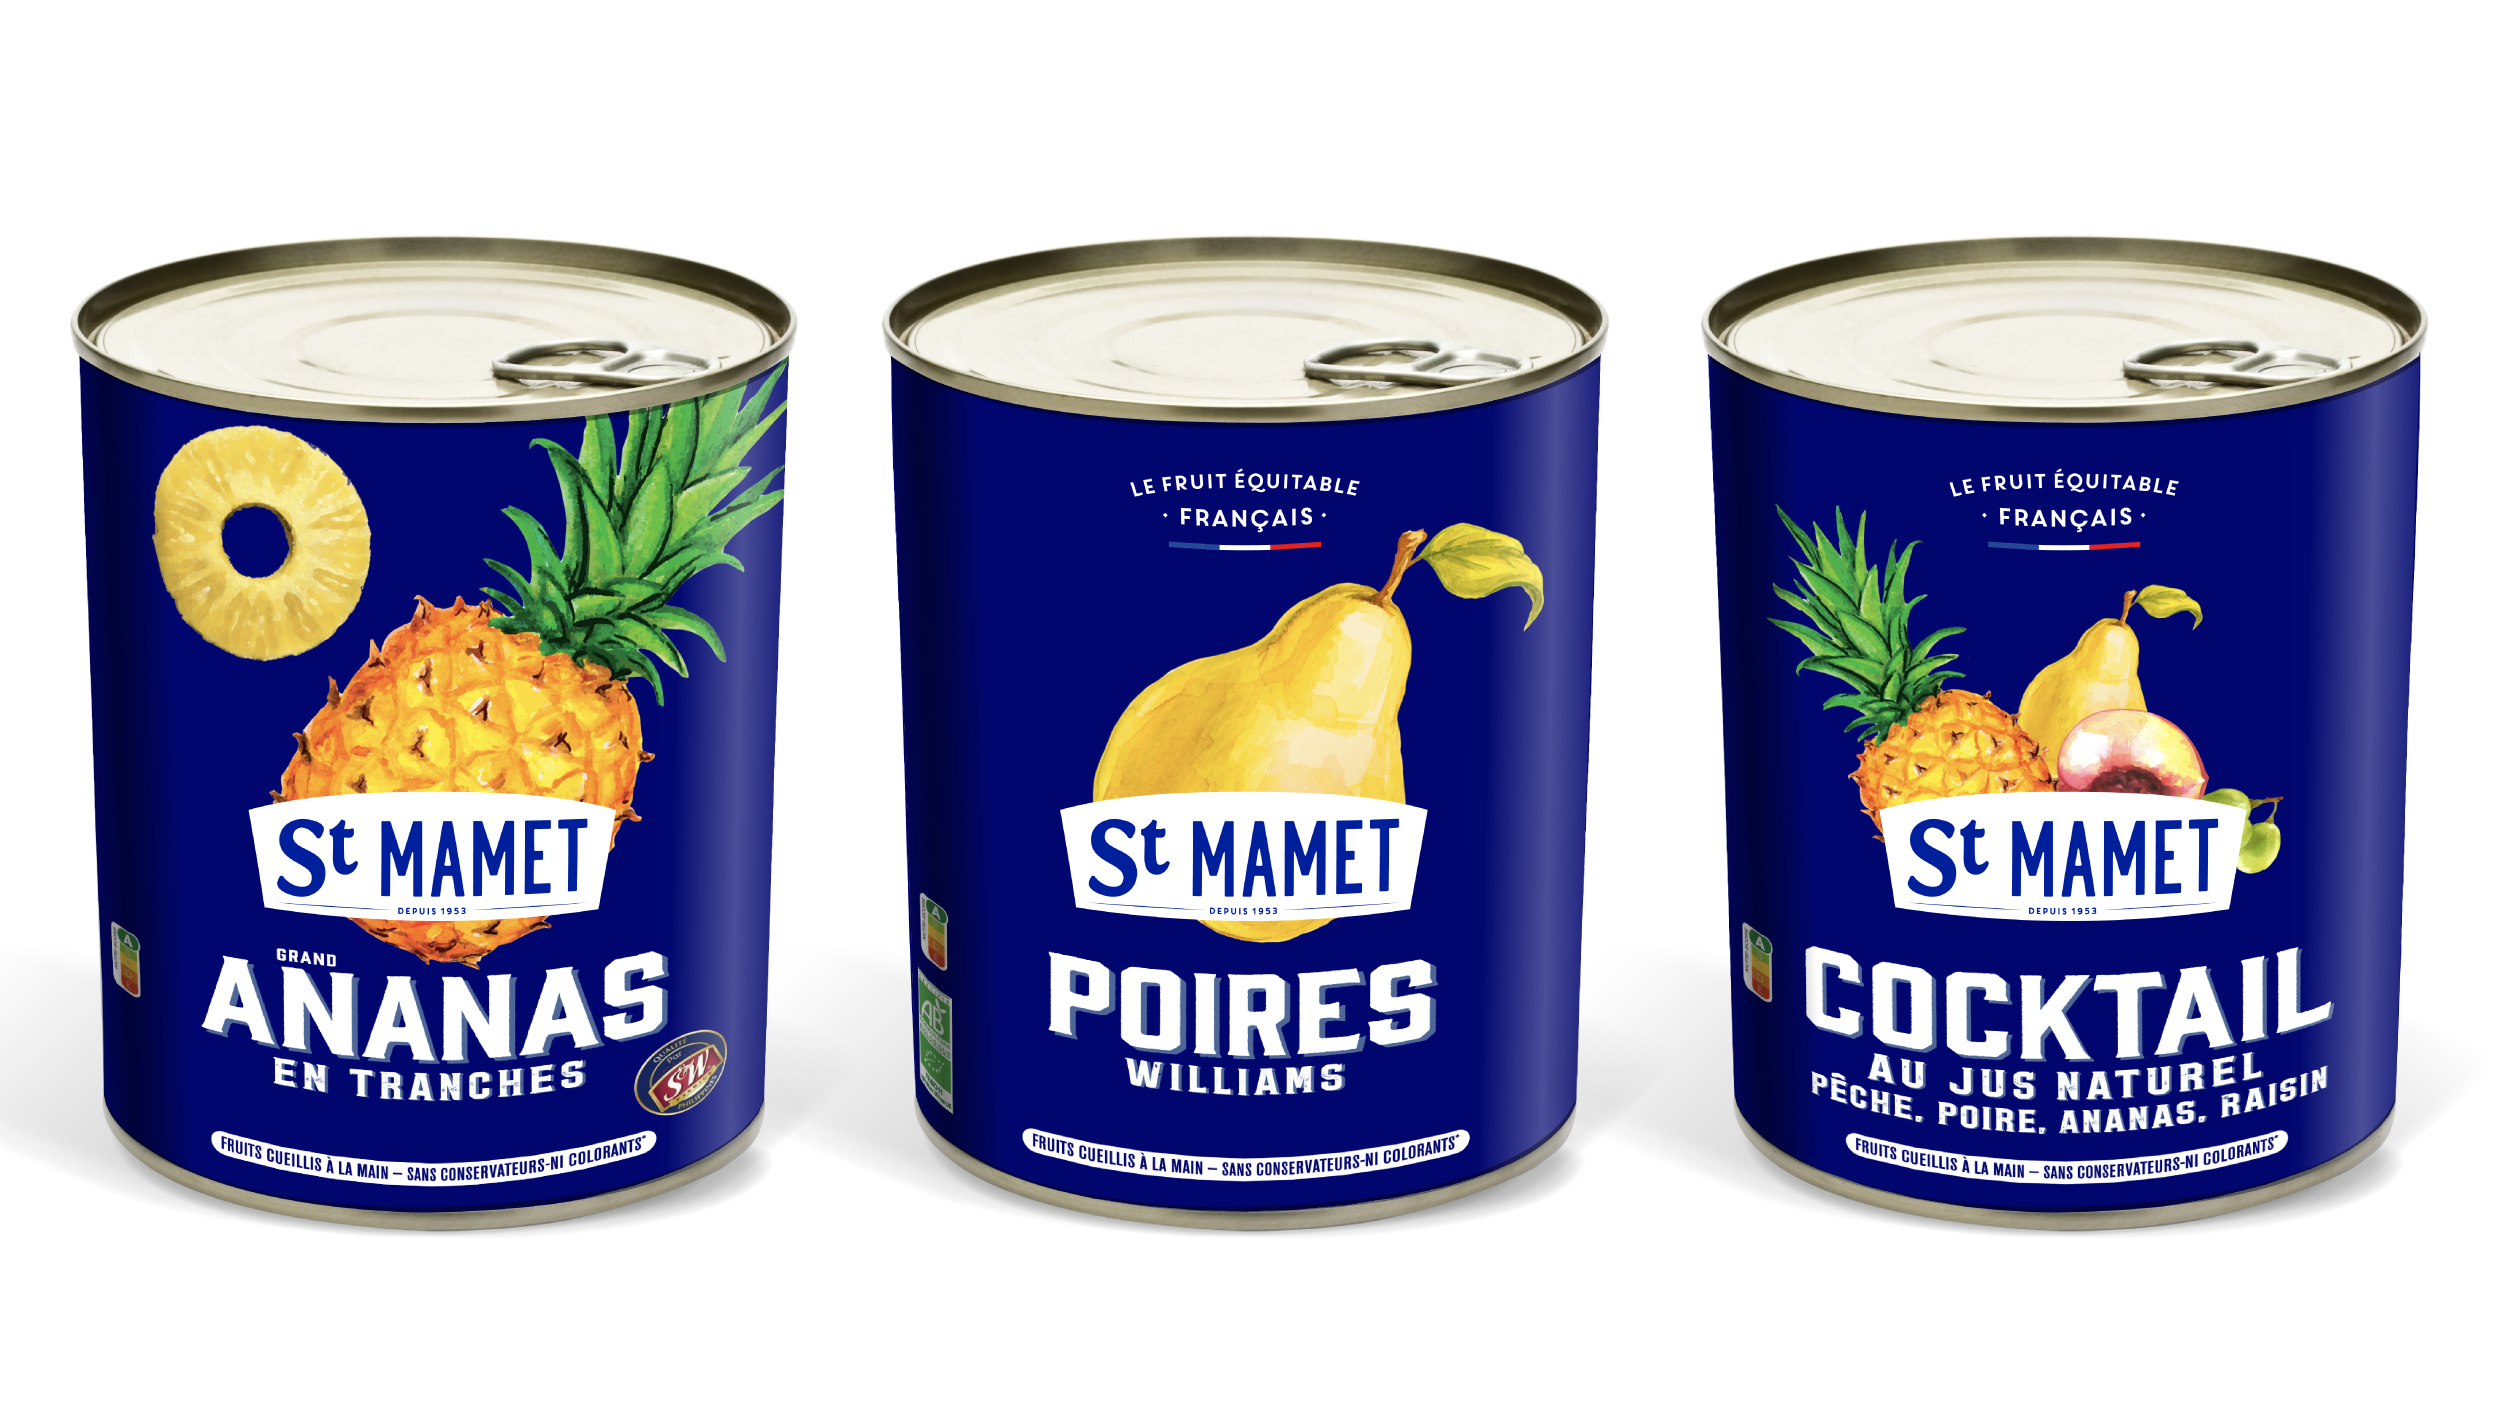 Ananas en tranches ~ St Mamet